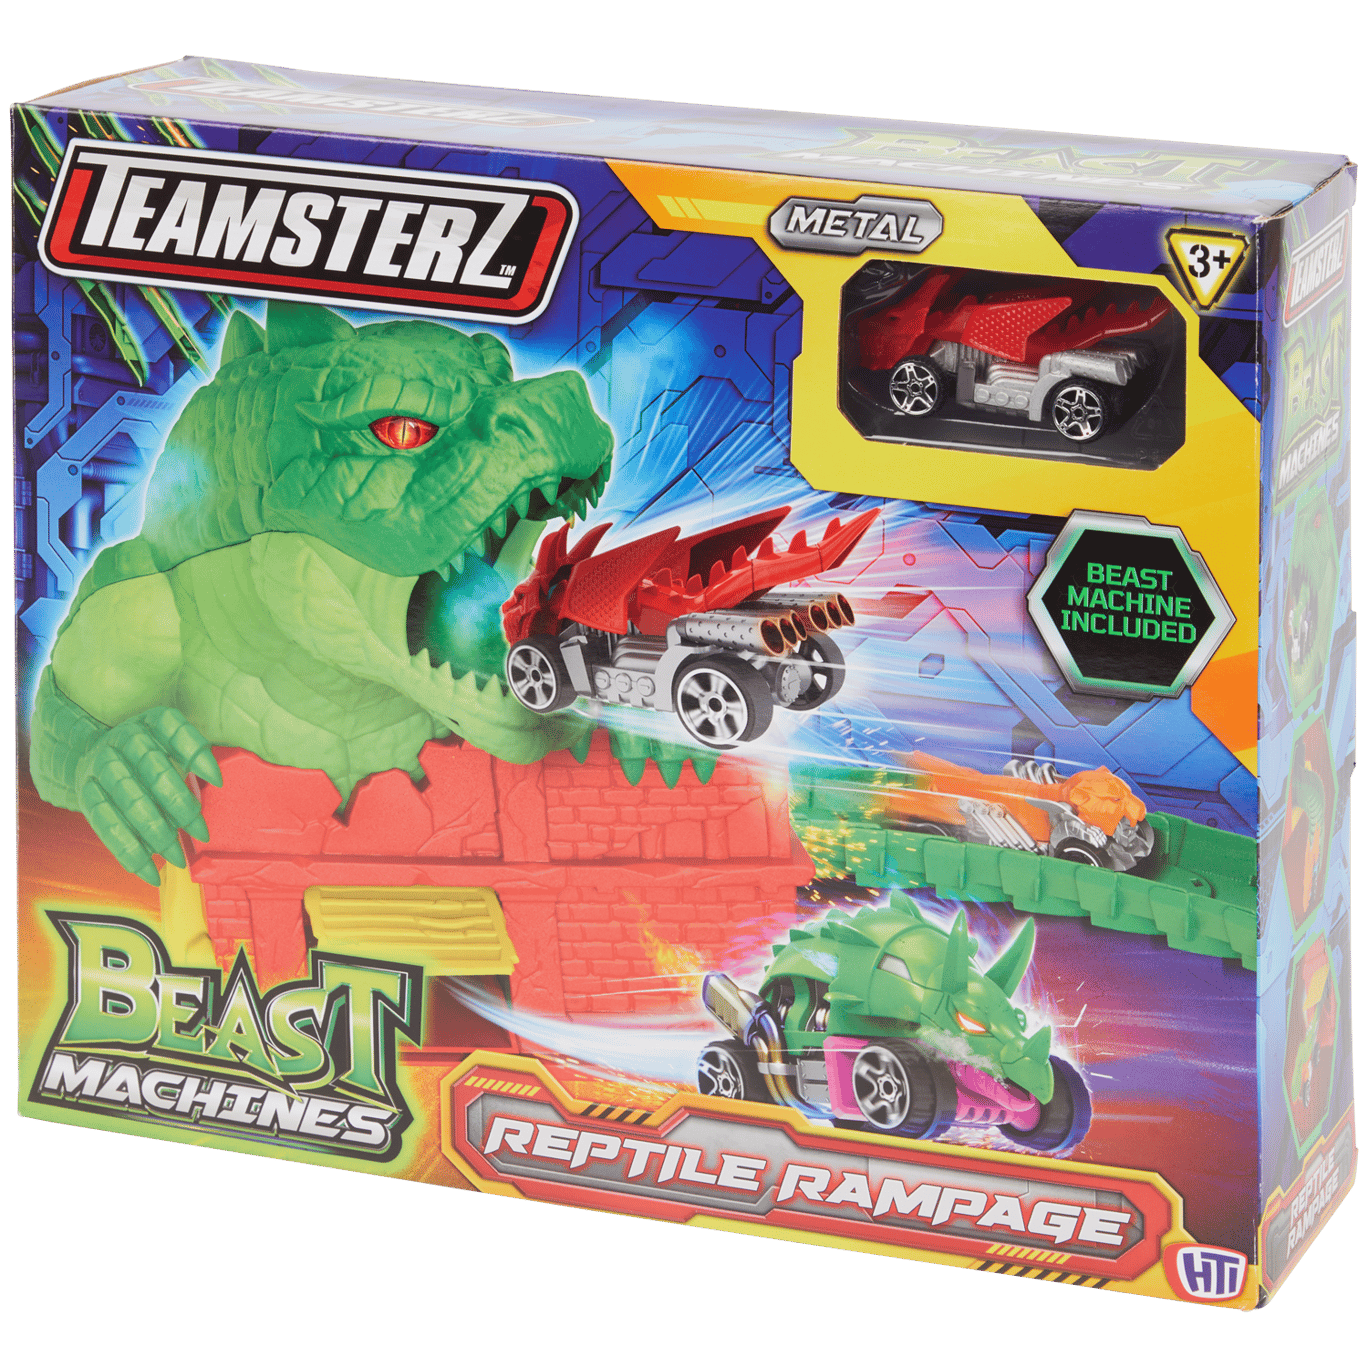 Circuit Teamsterz Beast Machines Reptile Rampage